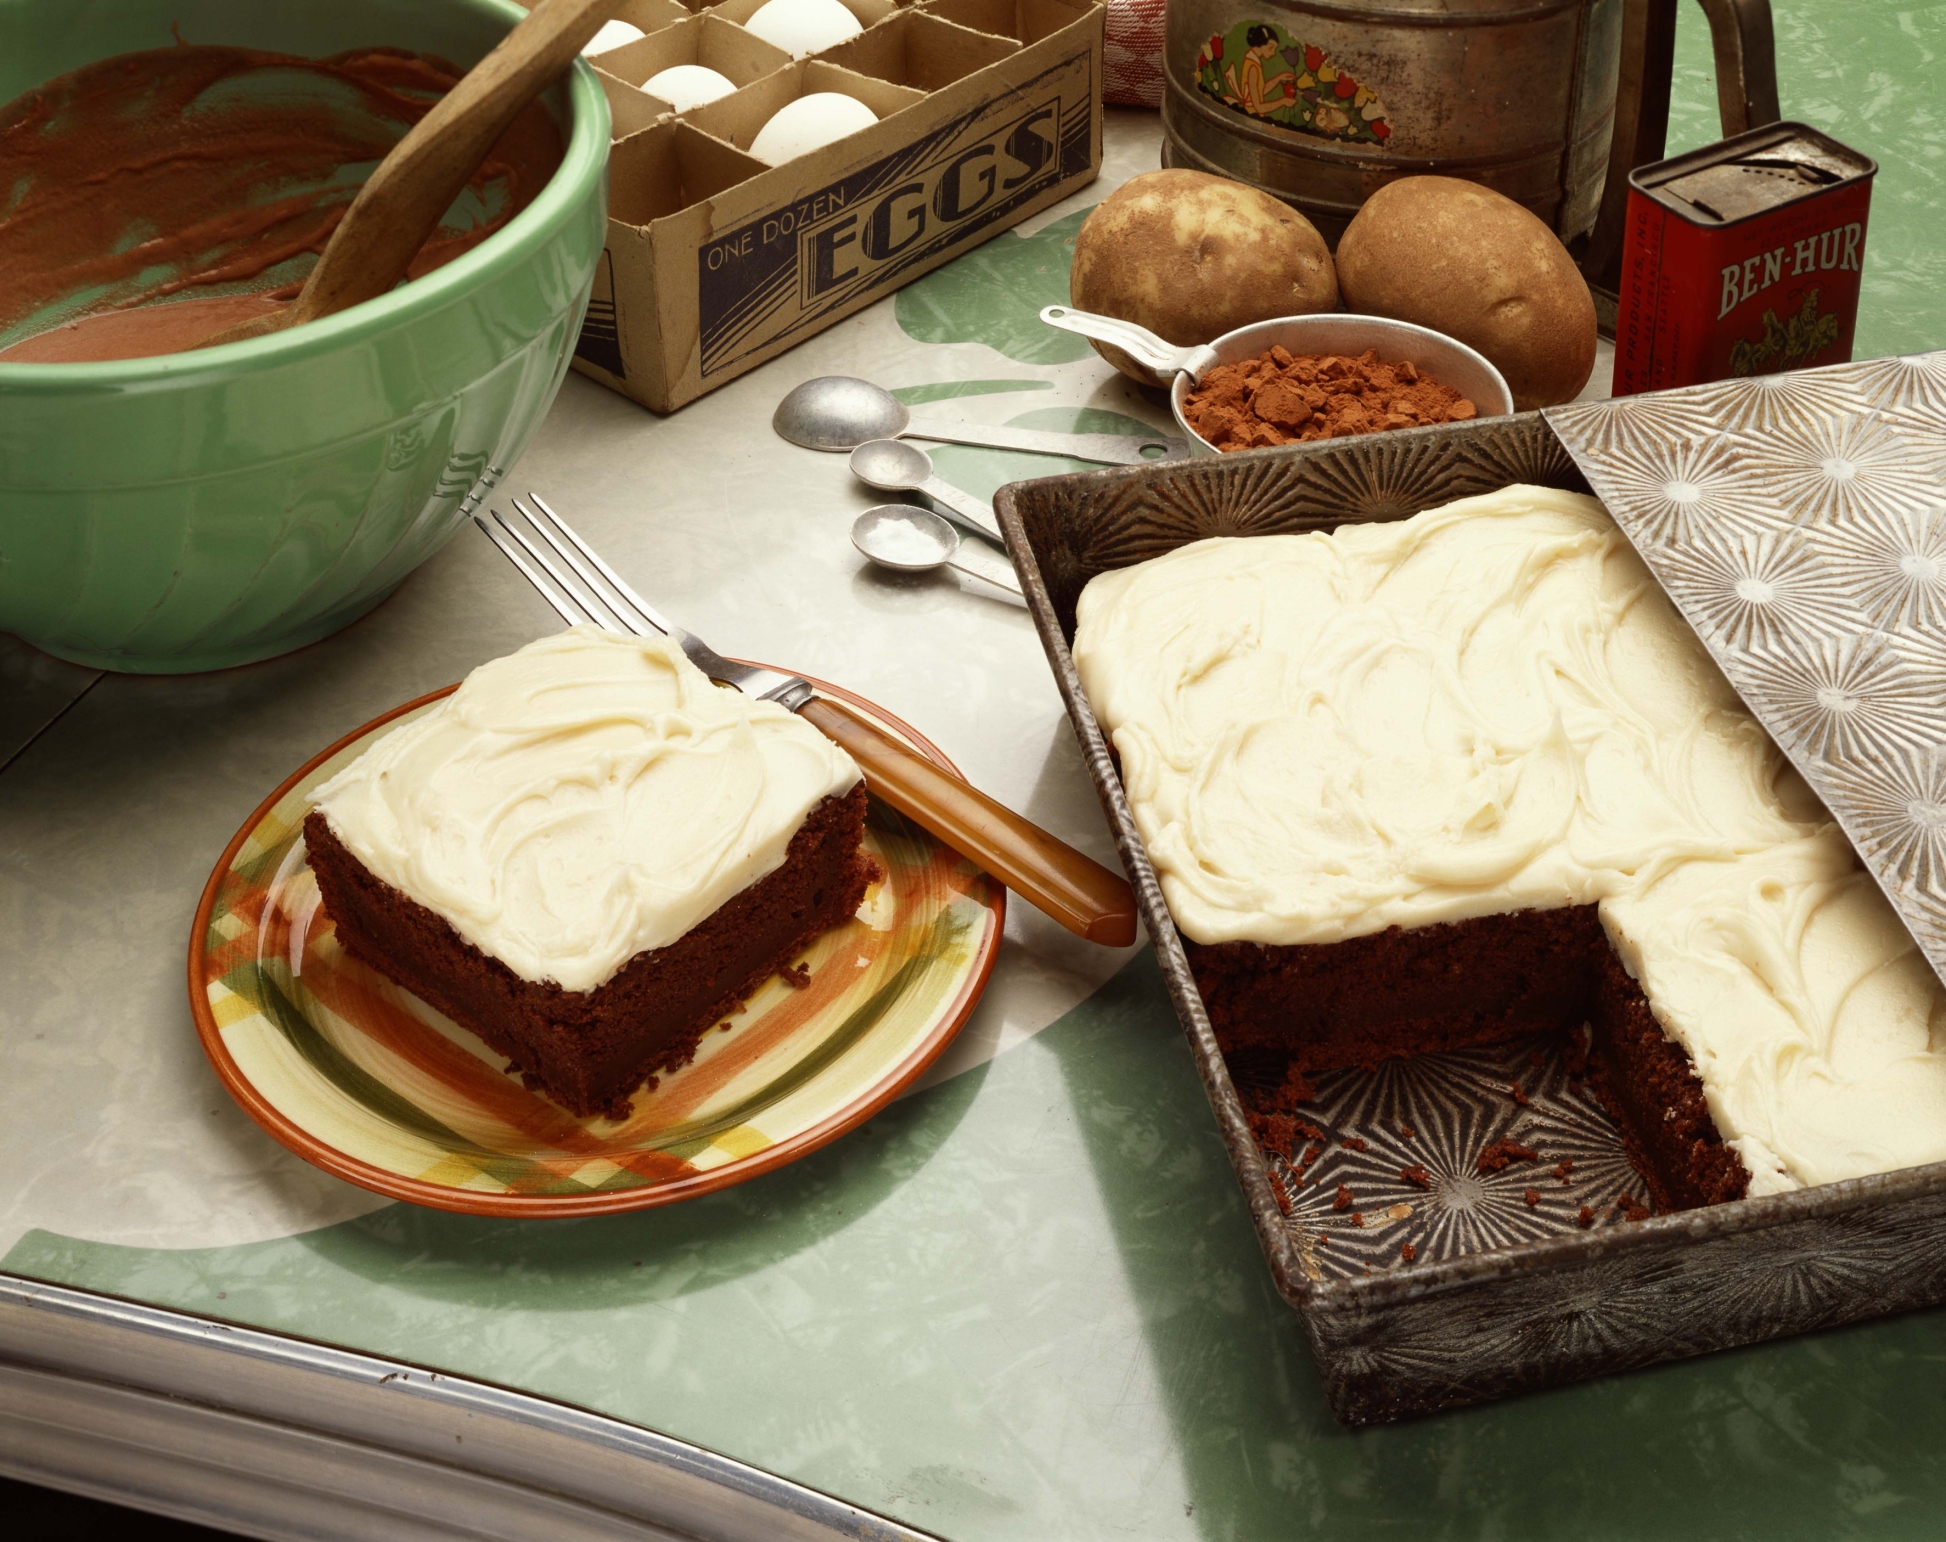 Sponge Cake Recipe - NYT Cooking